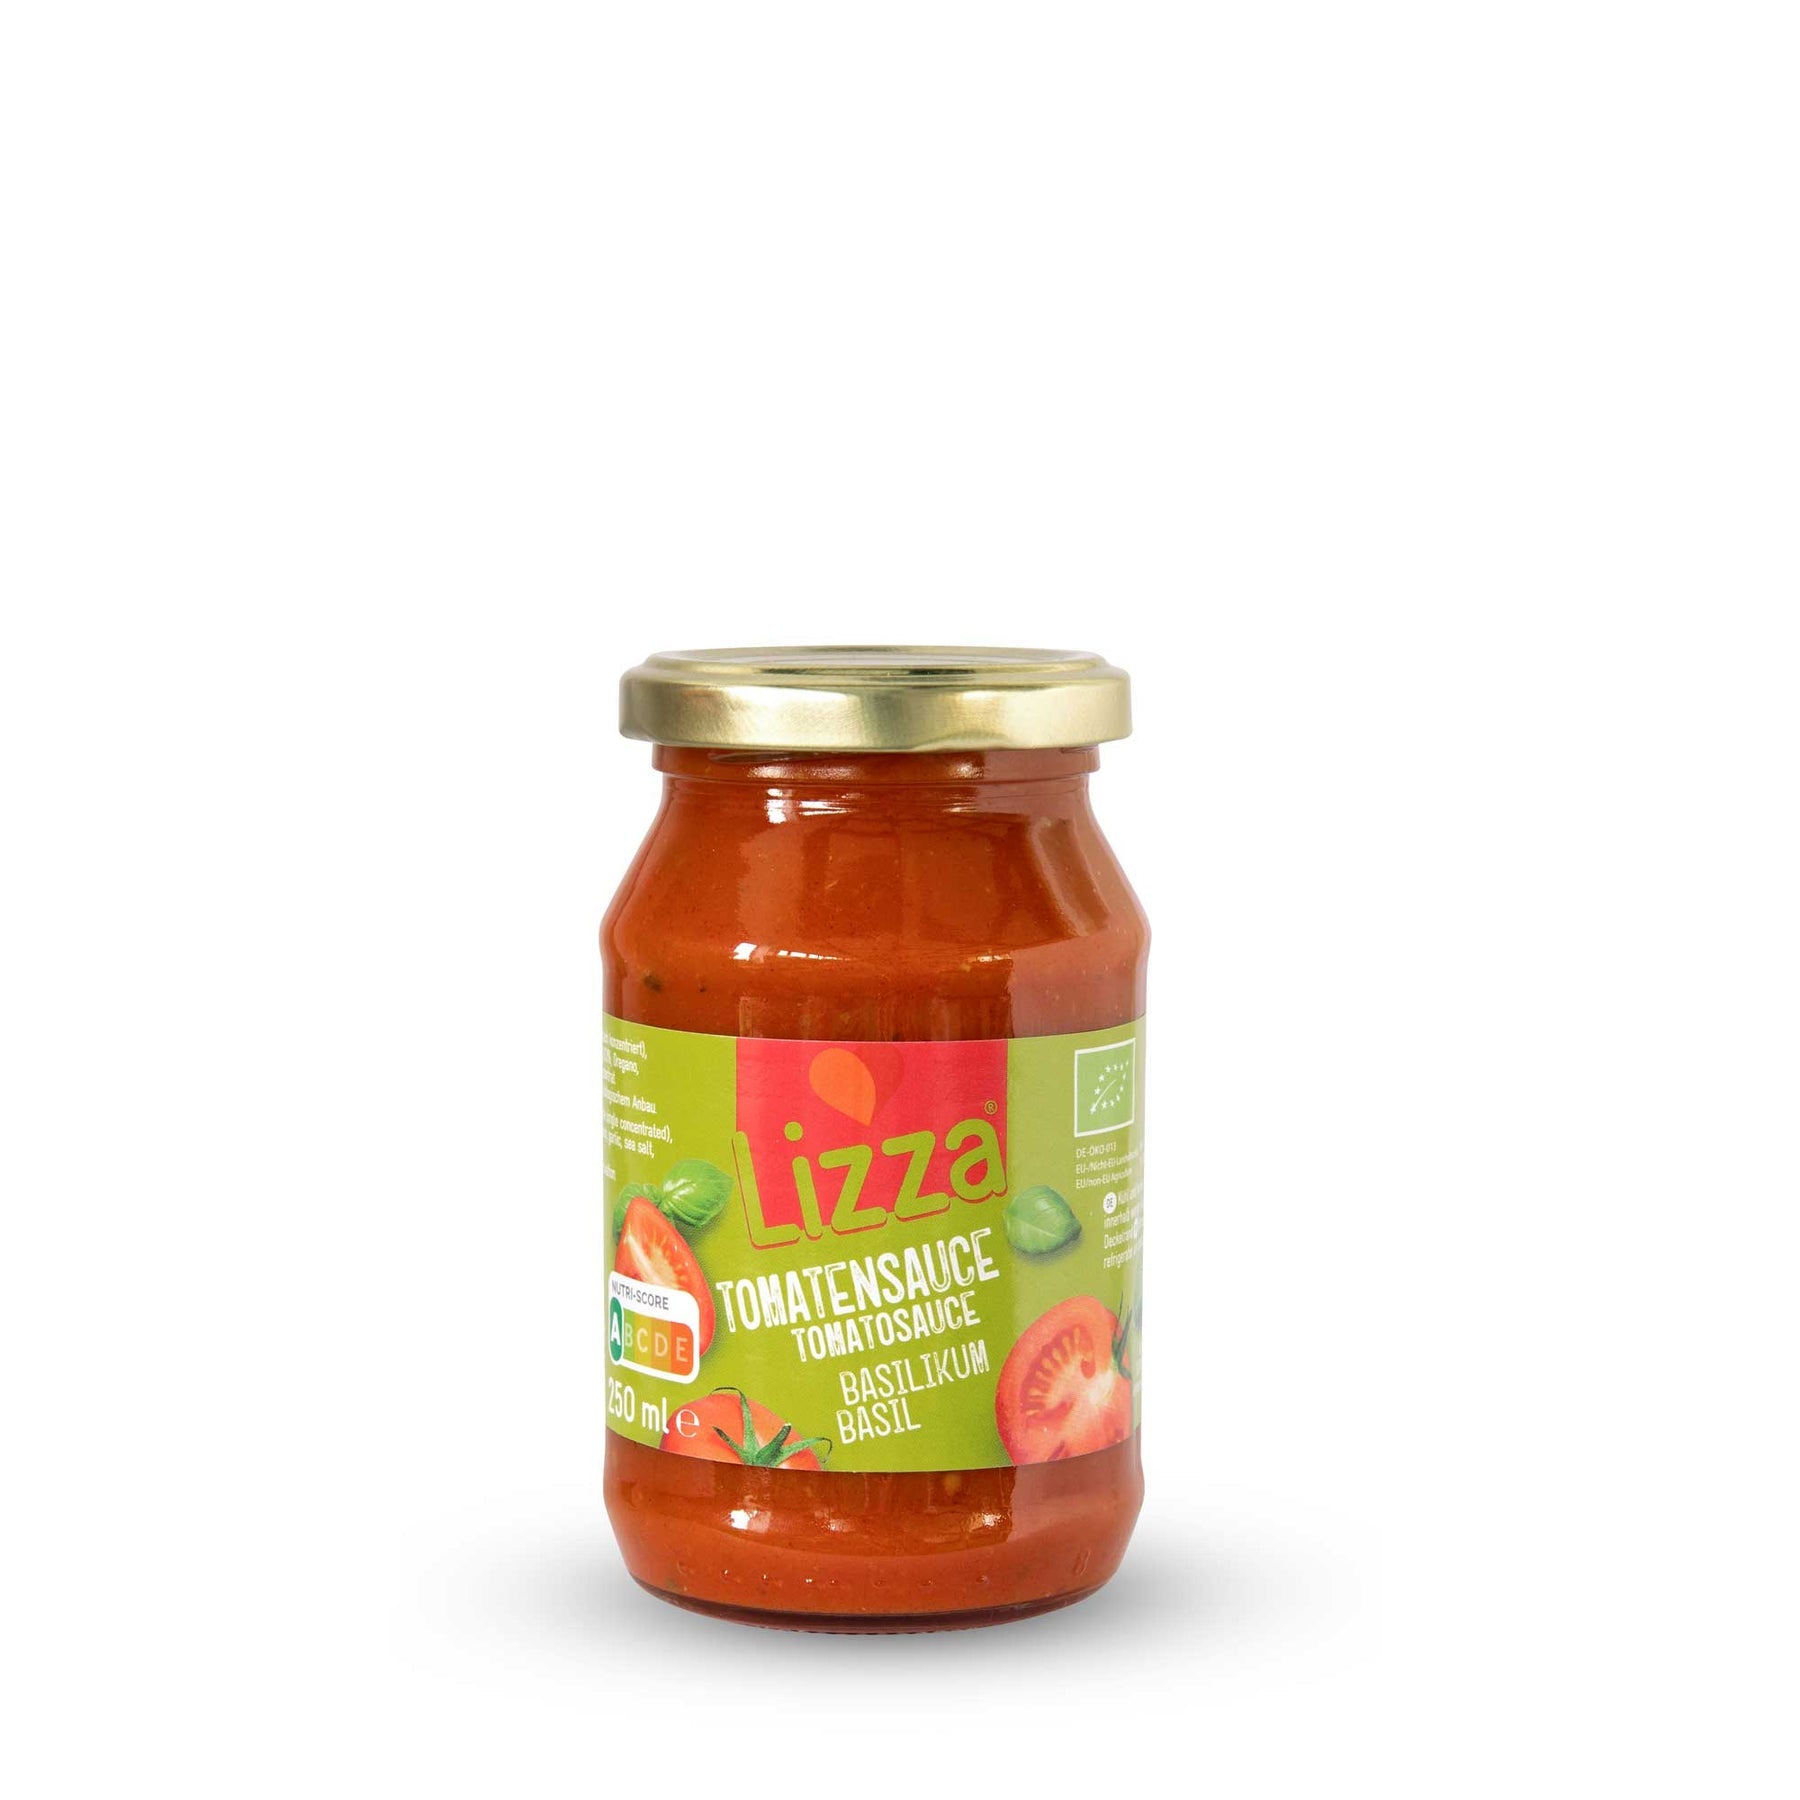 Lizza Organic Tomato Sauce » Gluten Free, Low Sugar, Soy Free